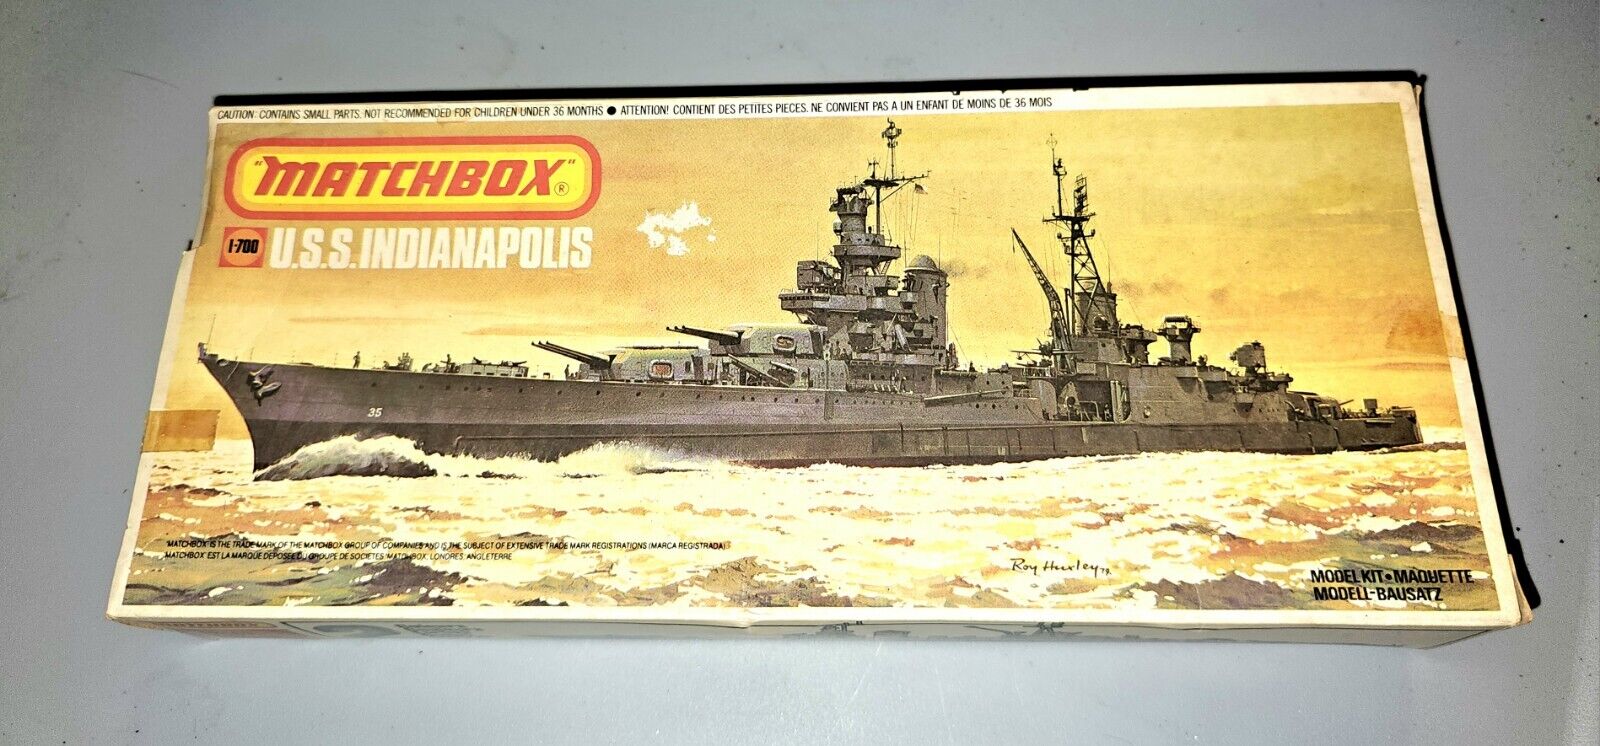 U.S.S. Indianapolis Matchbox 1/700 Scale Plastic Heavy Cruiser Model Kit